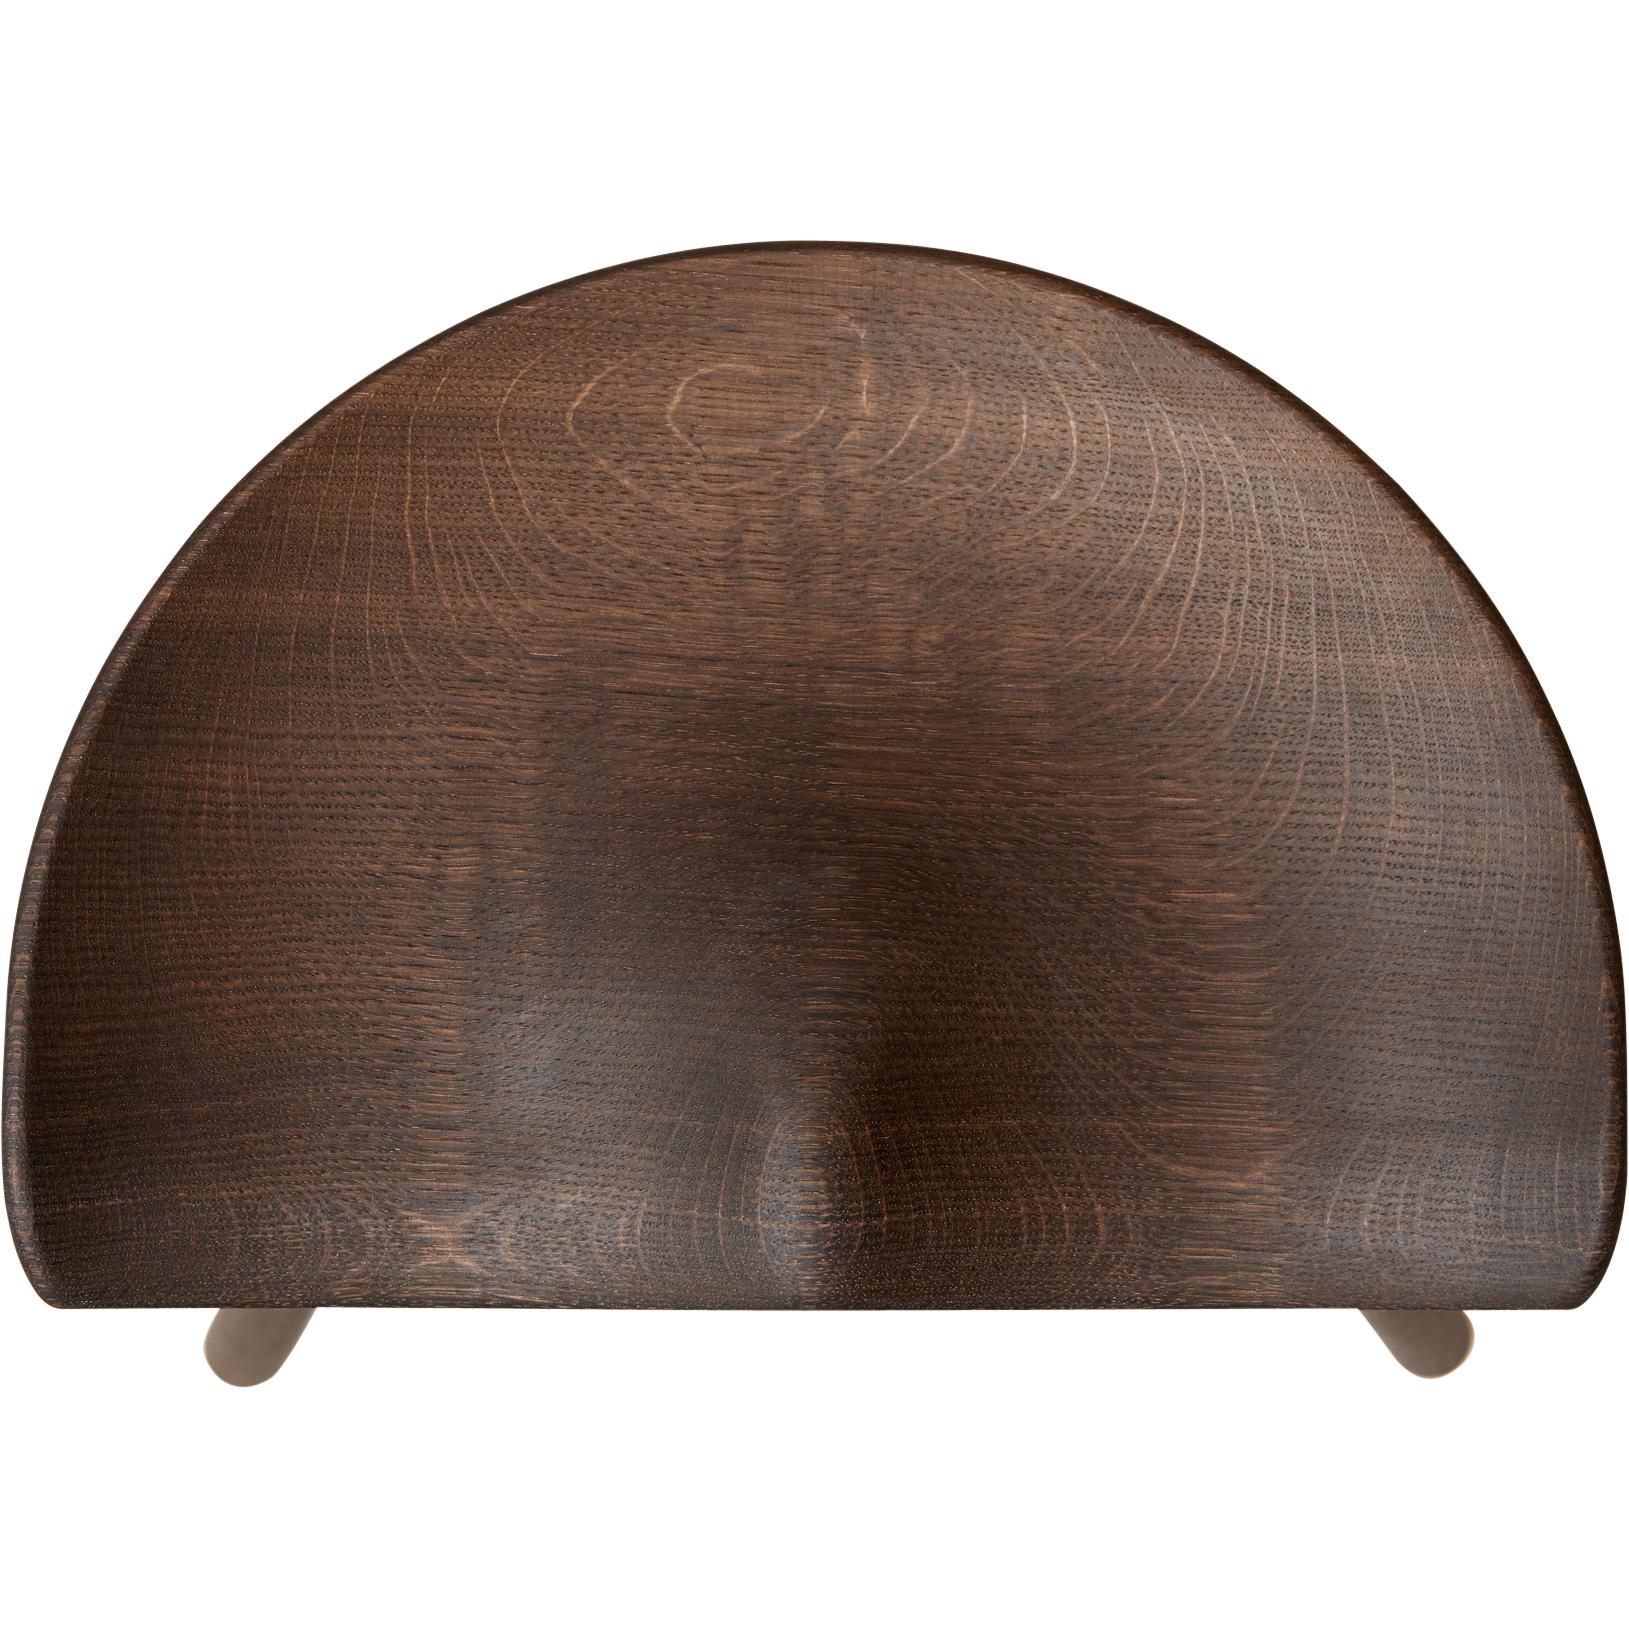 Form & Refine Shoemaker Chair No. 68. Smoked Oak